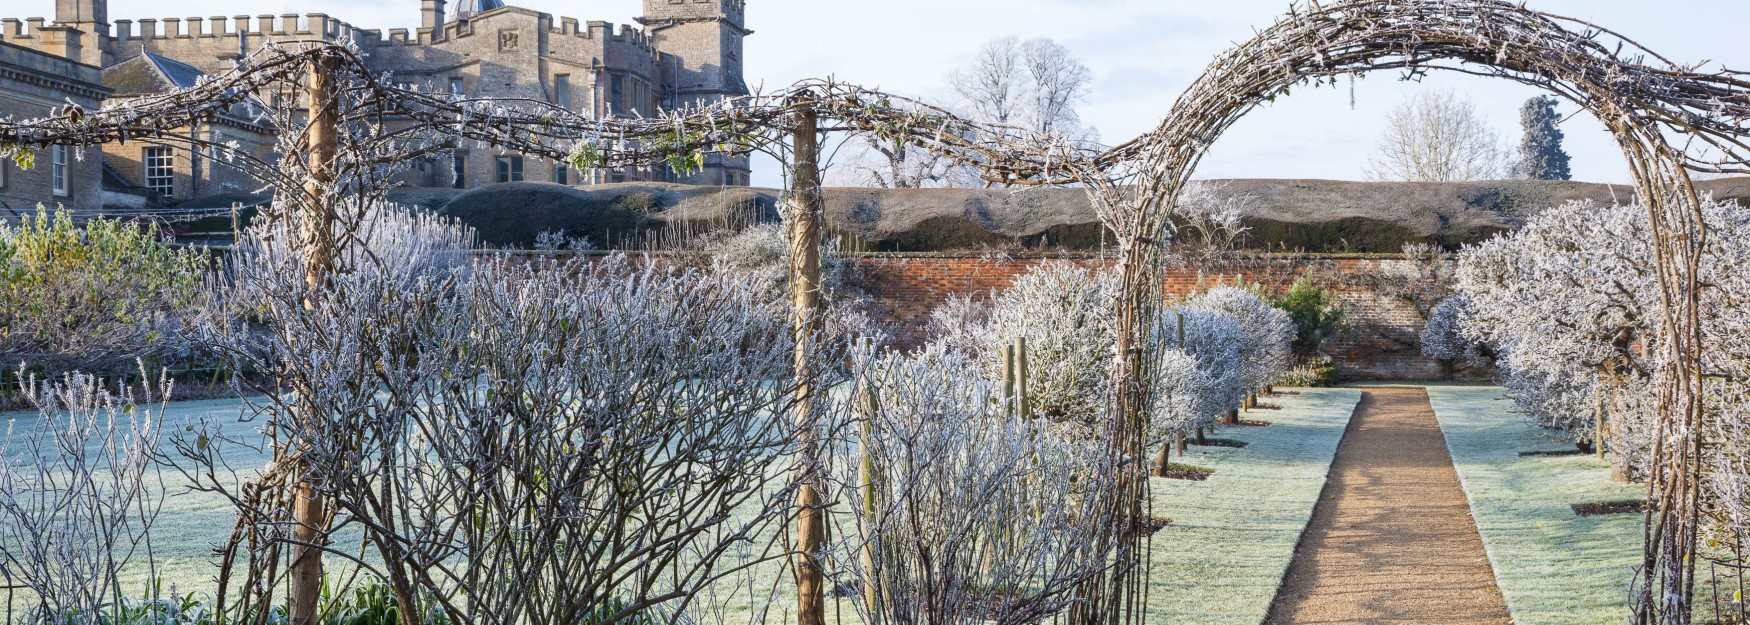 Rousham gardens covered in frost